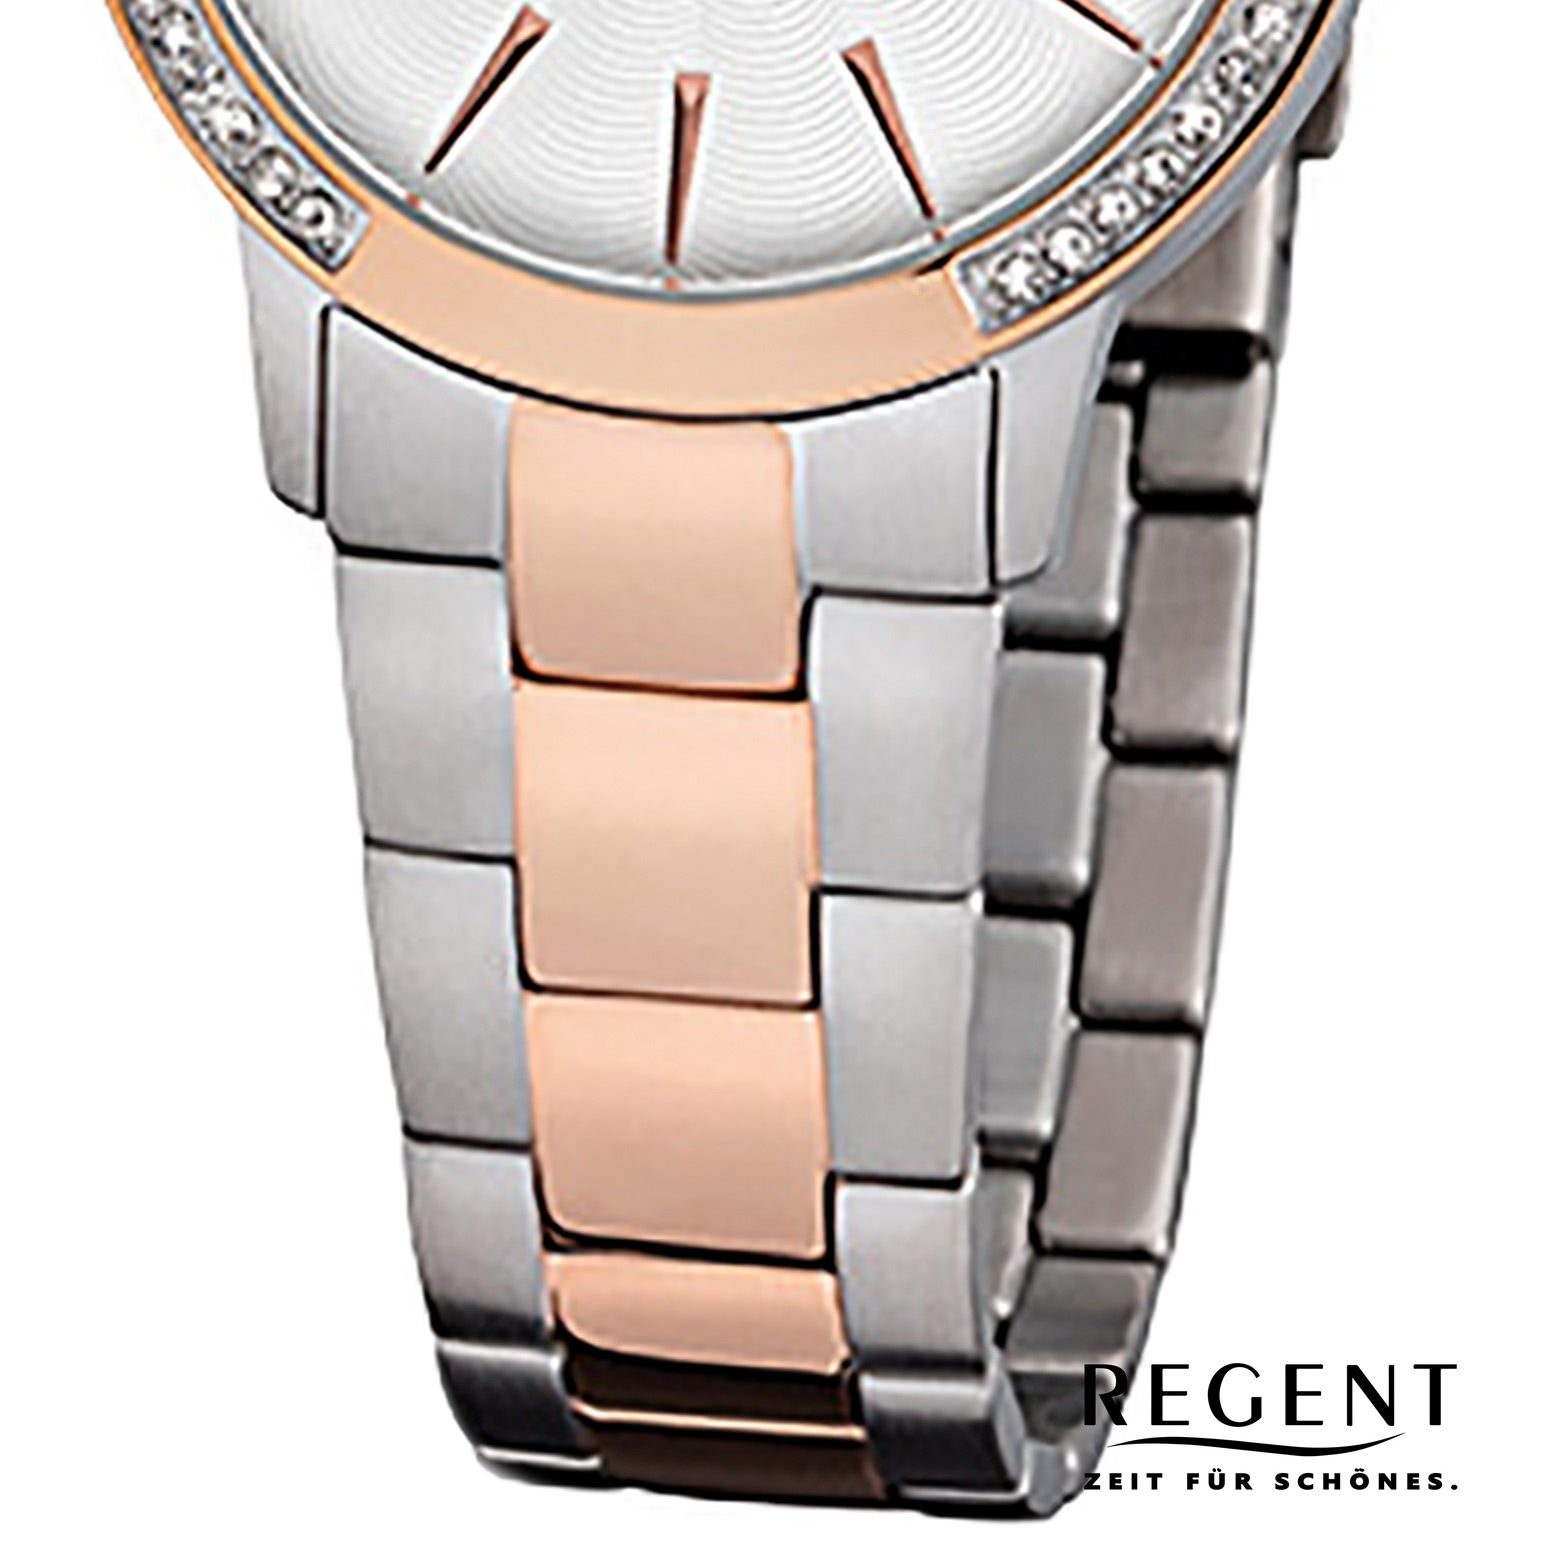 32mm), silber Damen-Armbanduhr mittel Regent rosegold, (ca. Damen Armbanduhr Quarzuhr rund, Regent Edelstahlarmband